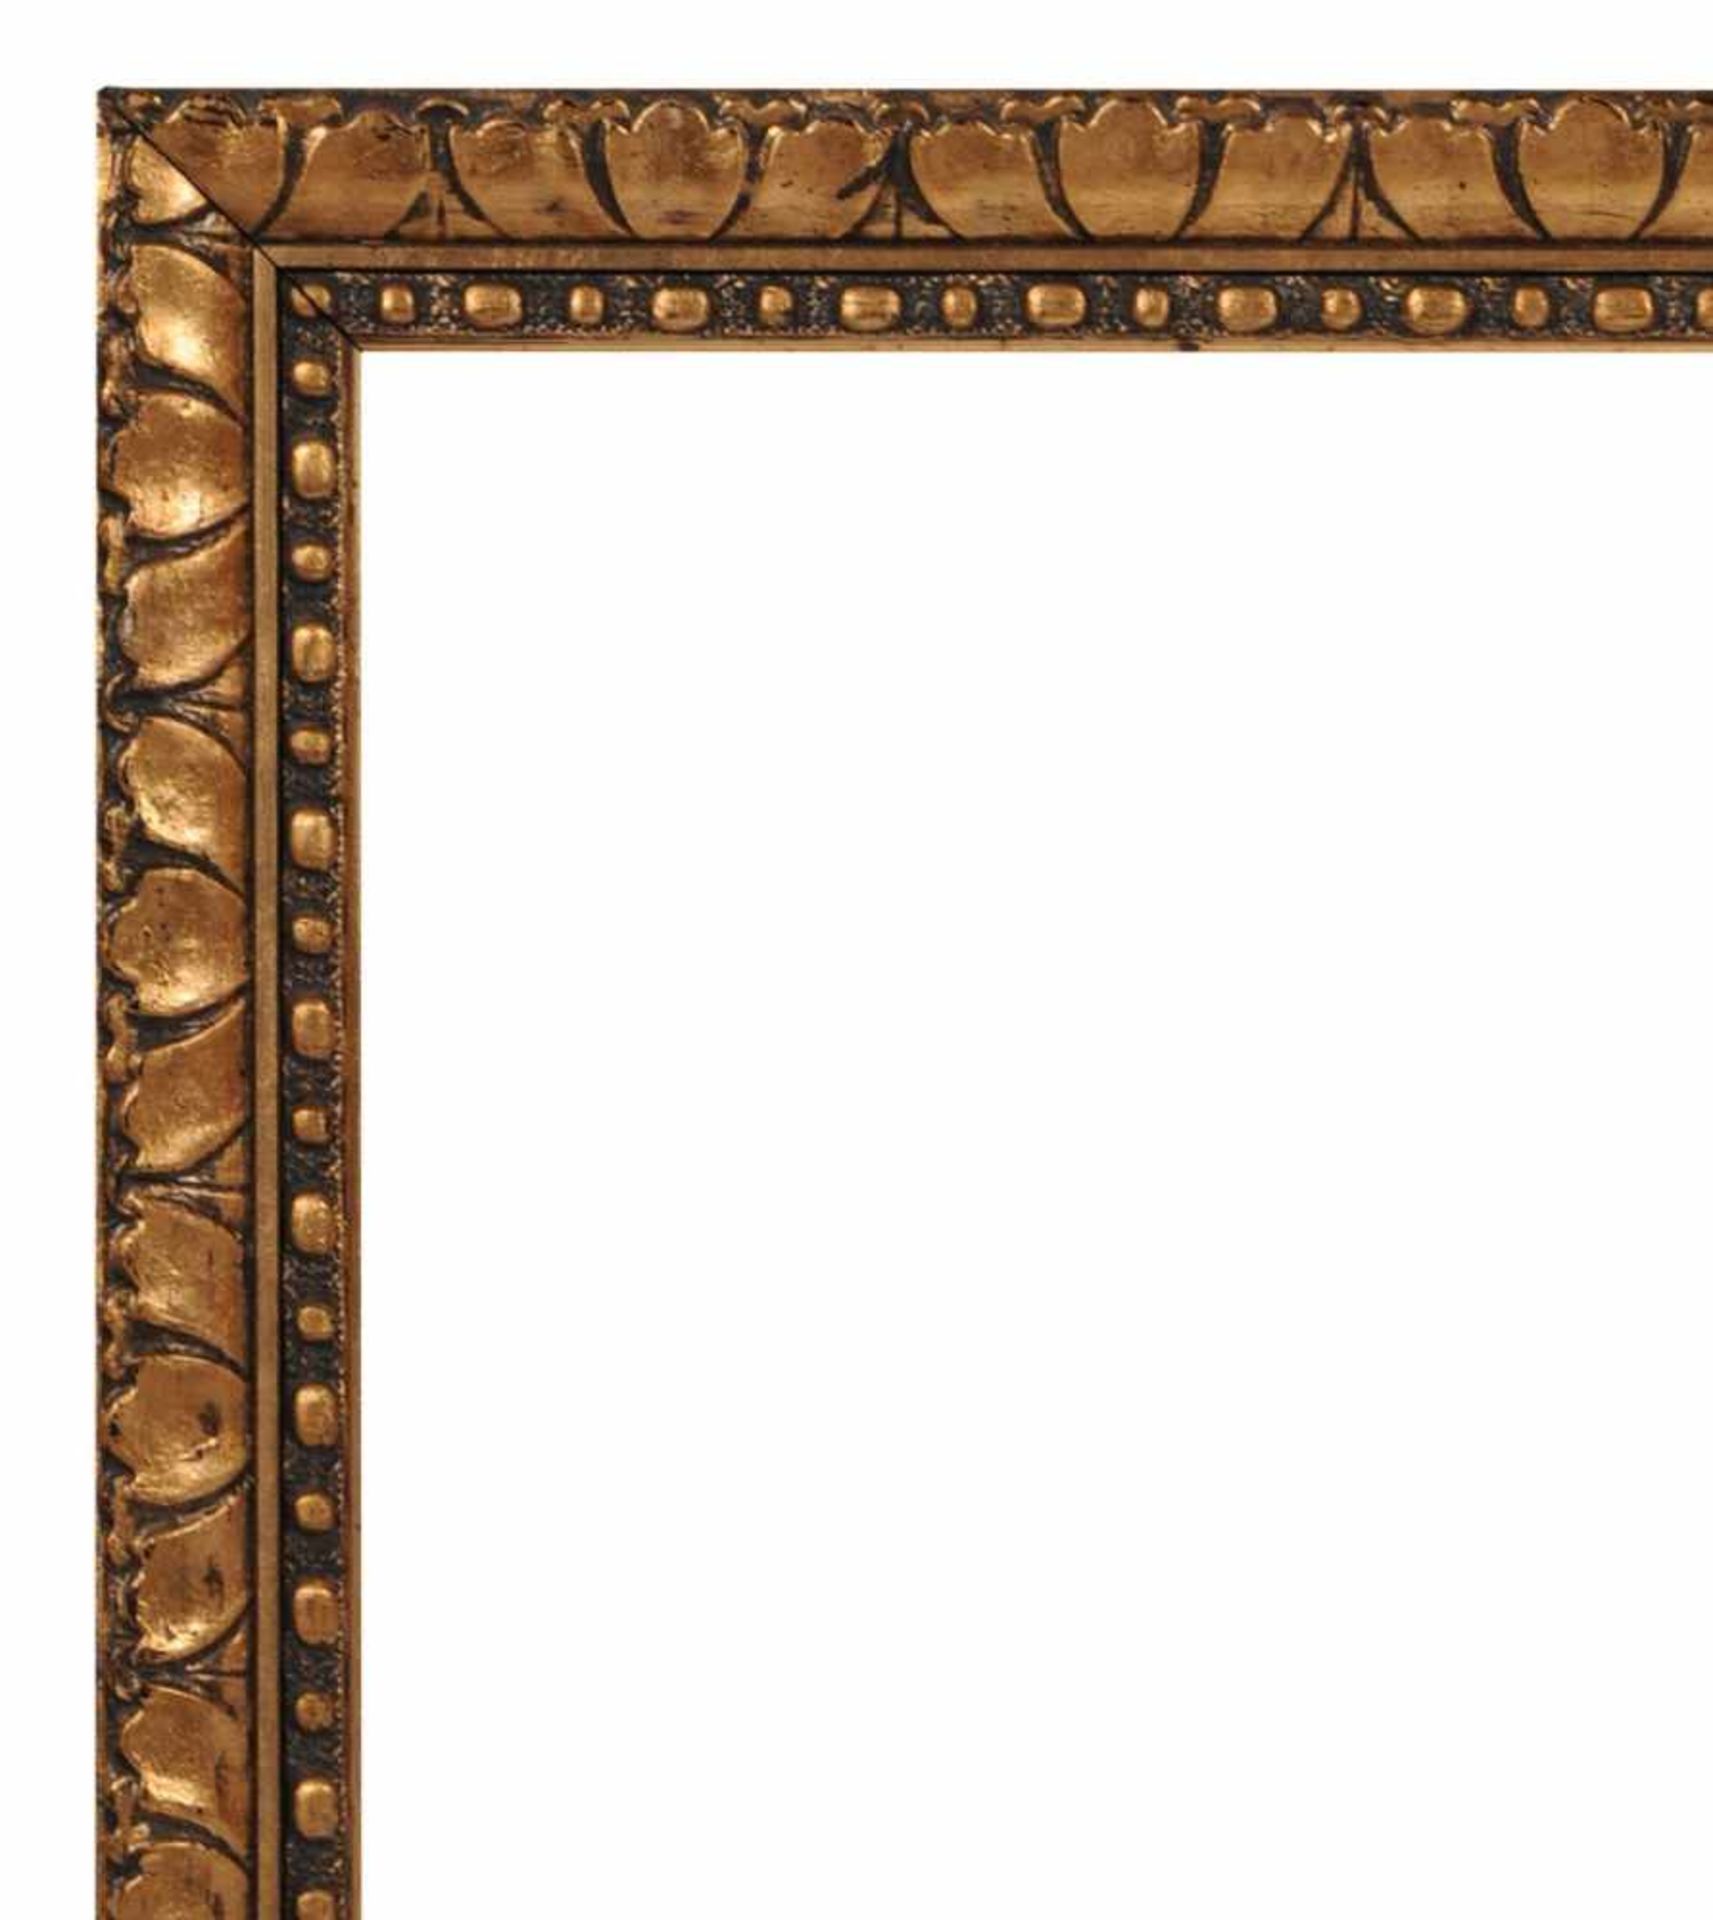 Jugendstil-Rahmen. Anfang 20. Jh.Holz, masseverziert, goldfarbene Blattmetallauflage. Mit - Bild 2 aus 3